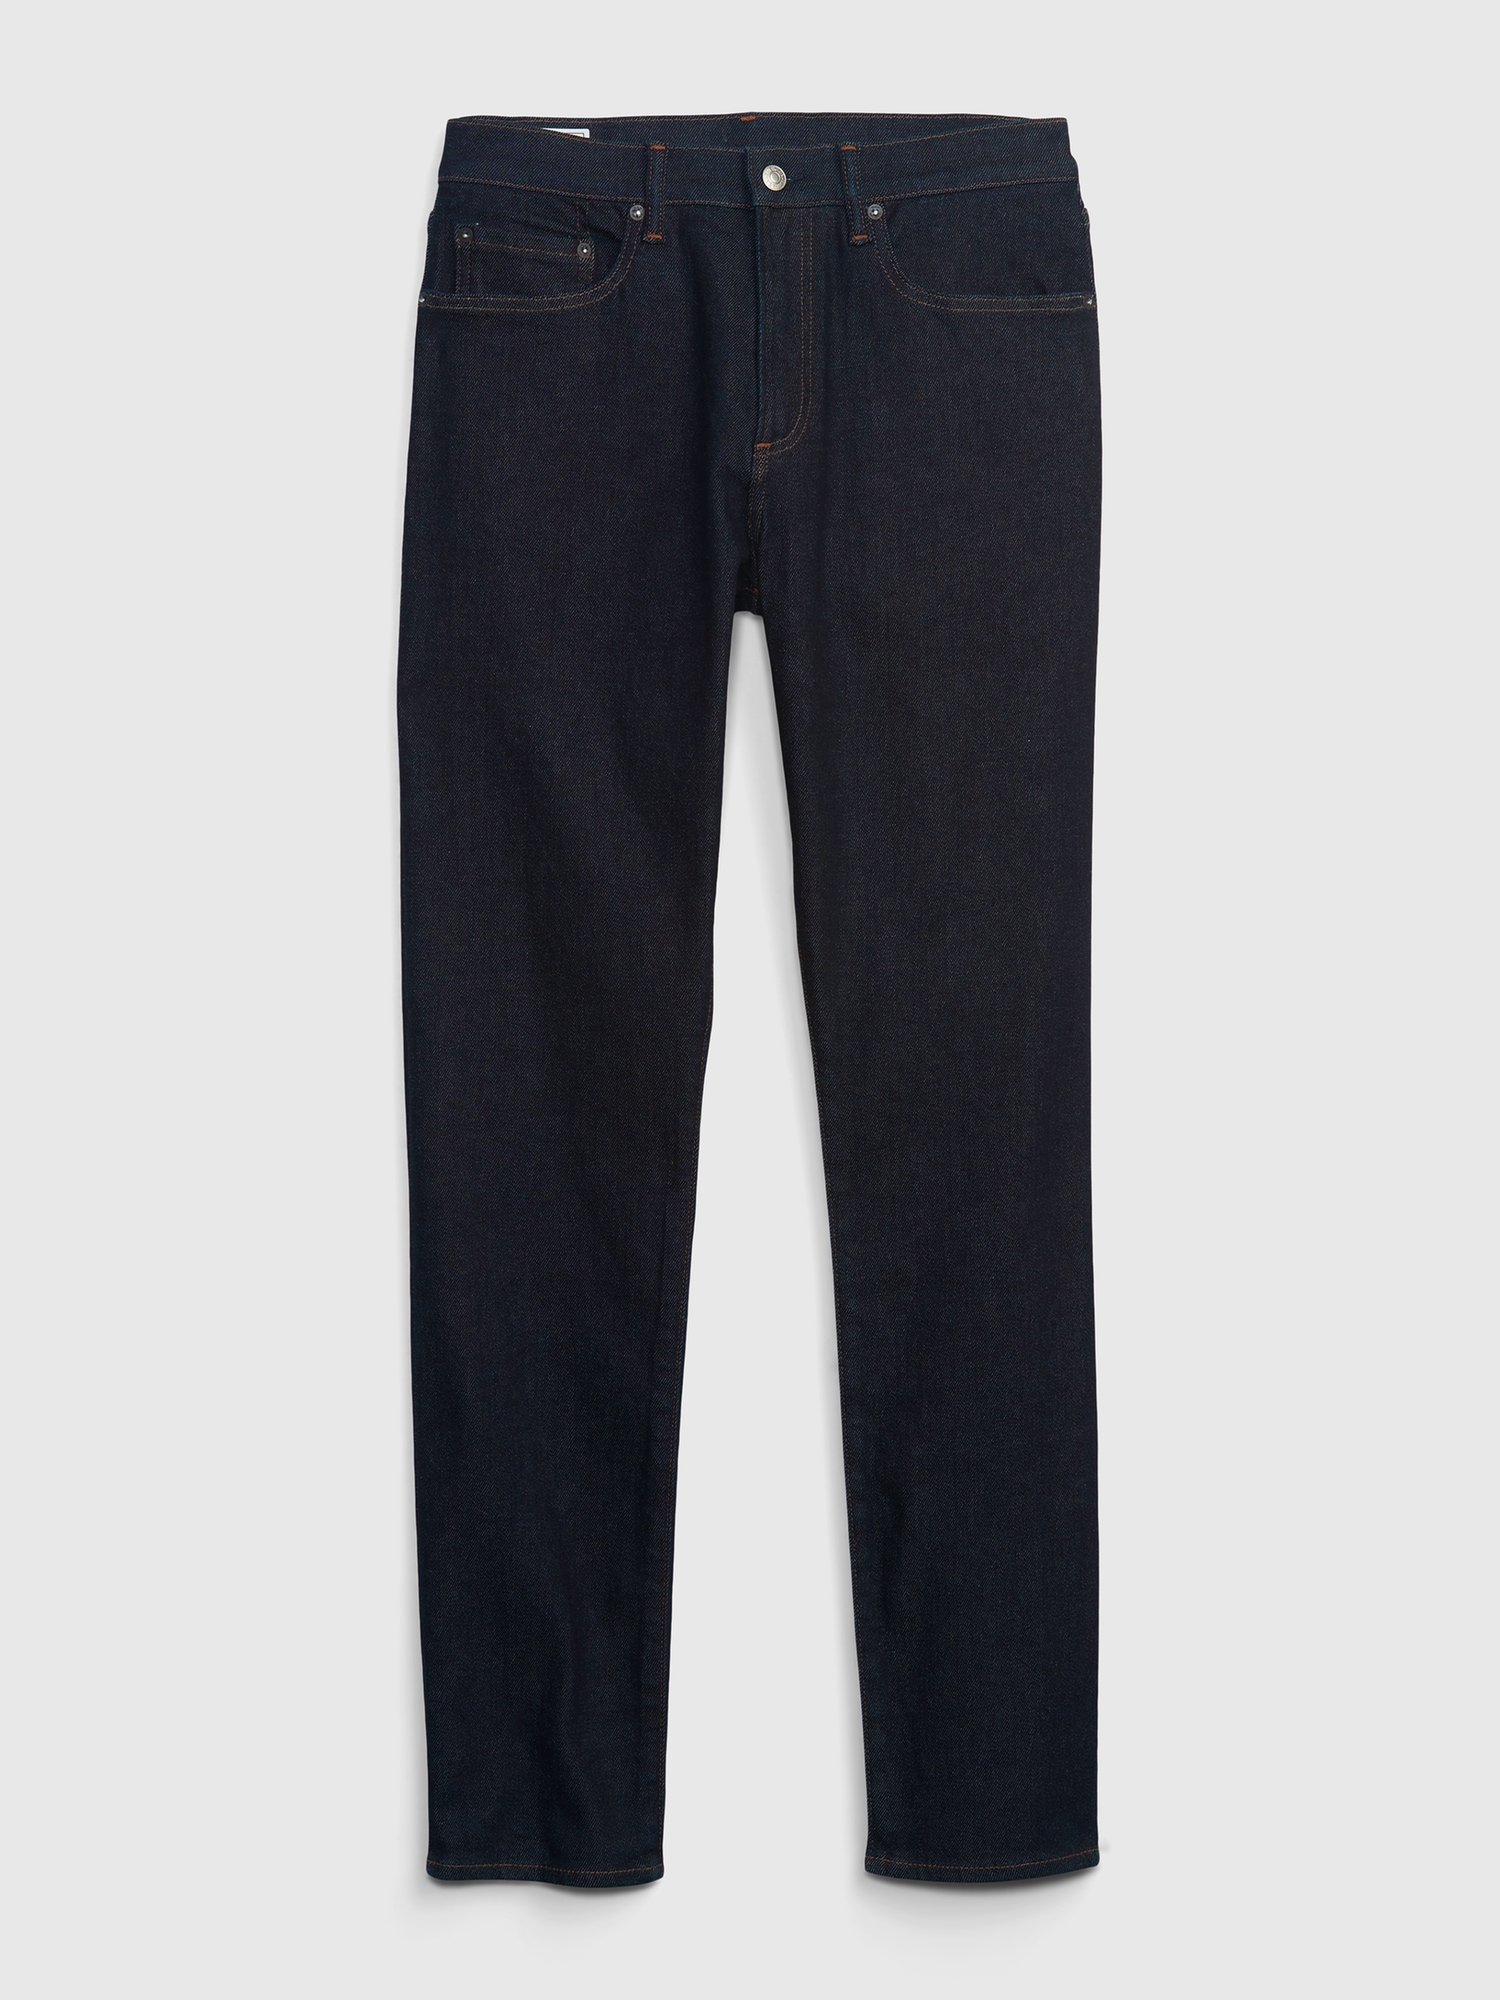 Mens Gap Denim Soft Wear Skinny Stretch / Flex Dark Blue Jeans 30 X 32 NEW  NWT